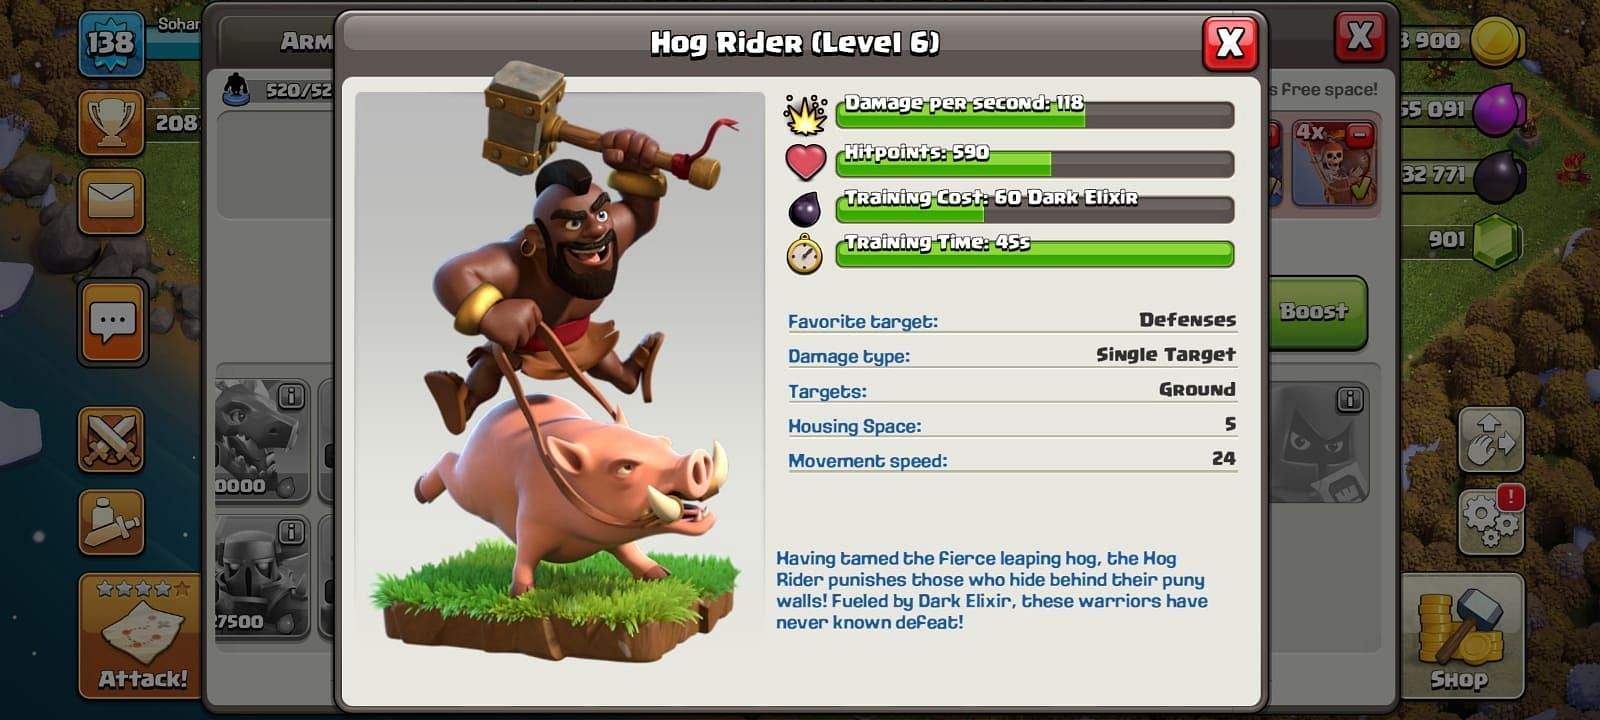 Hog Rider (Image via Clash of clans)